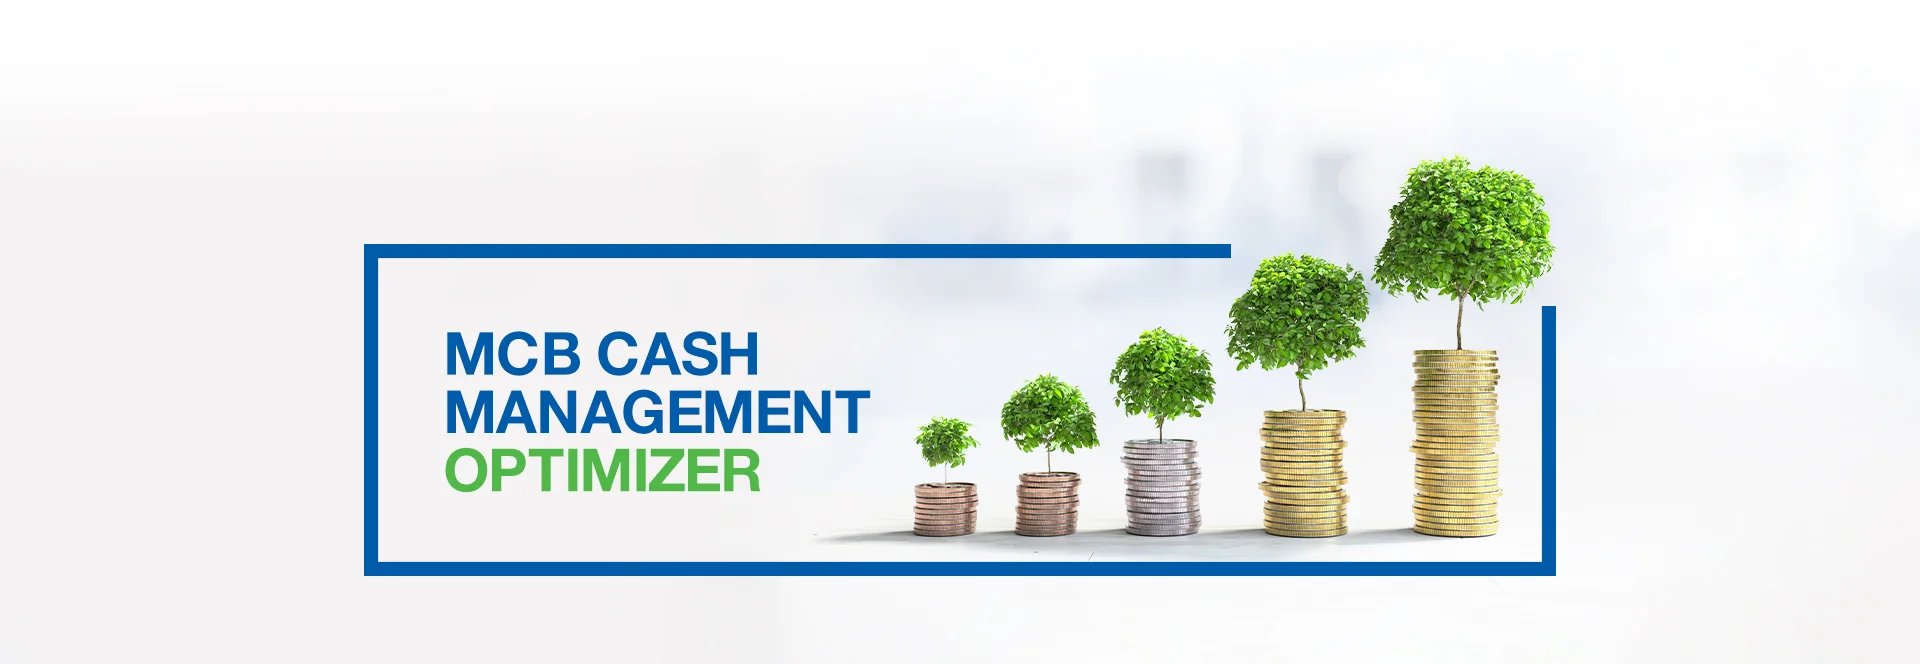 MCB Cash Management Optimizer